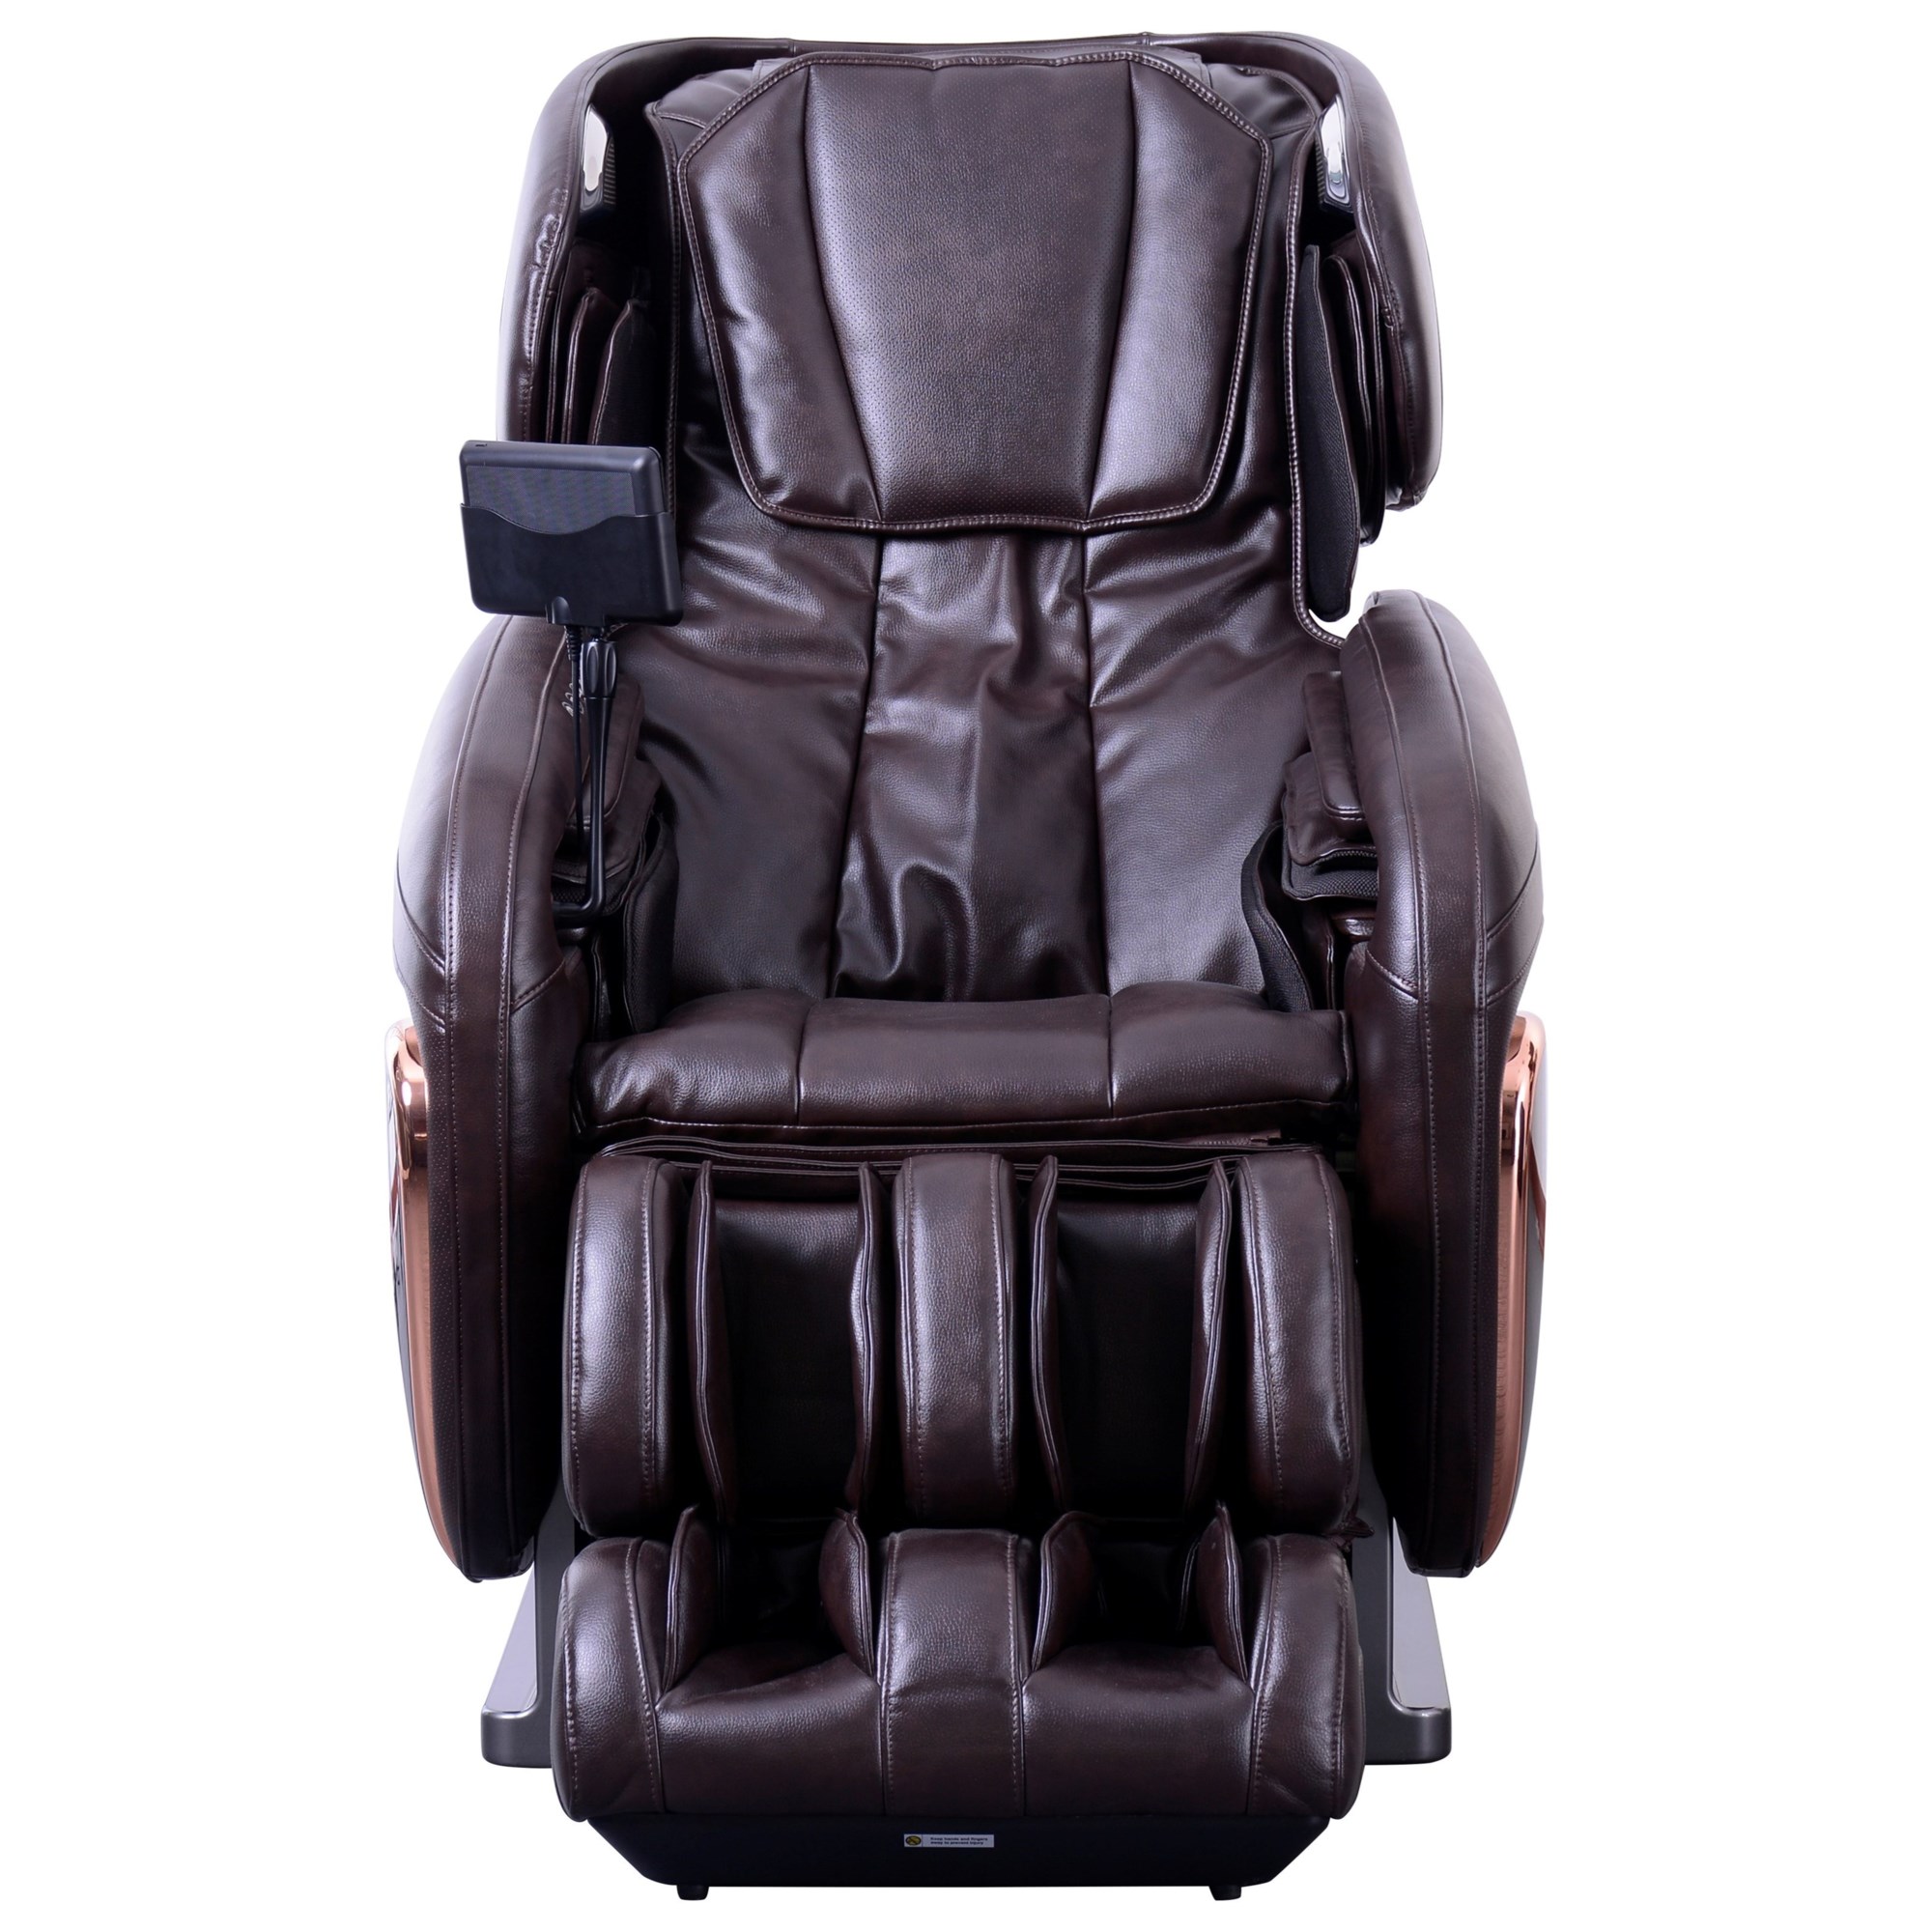 Cozzia Cz Cz 630 Power Reclining 3d Massage Chair Furniture Superstore Rochester Mn Recliners